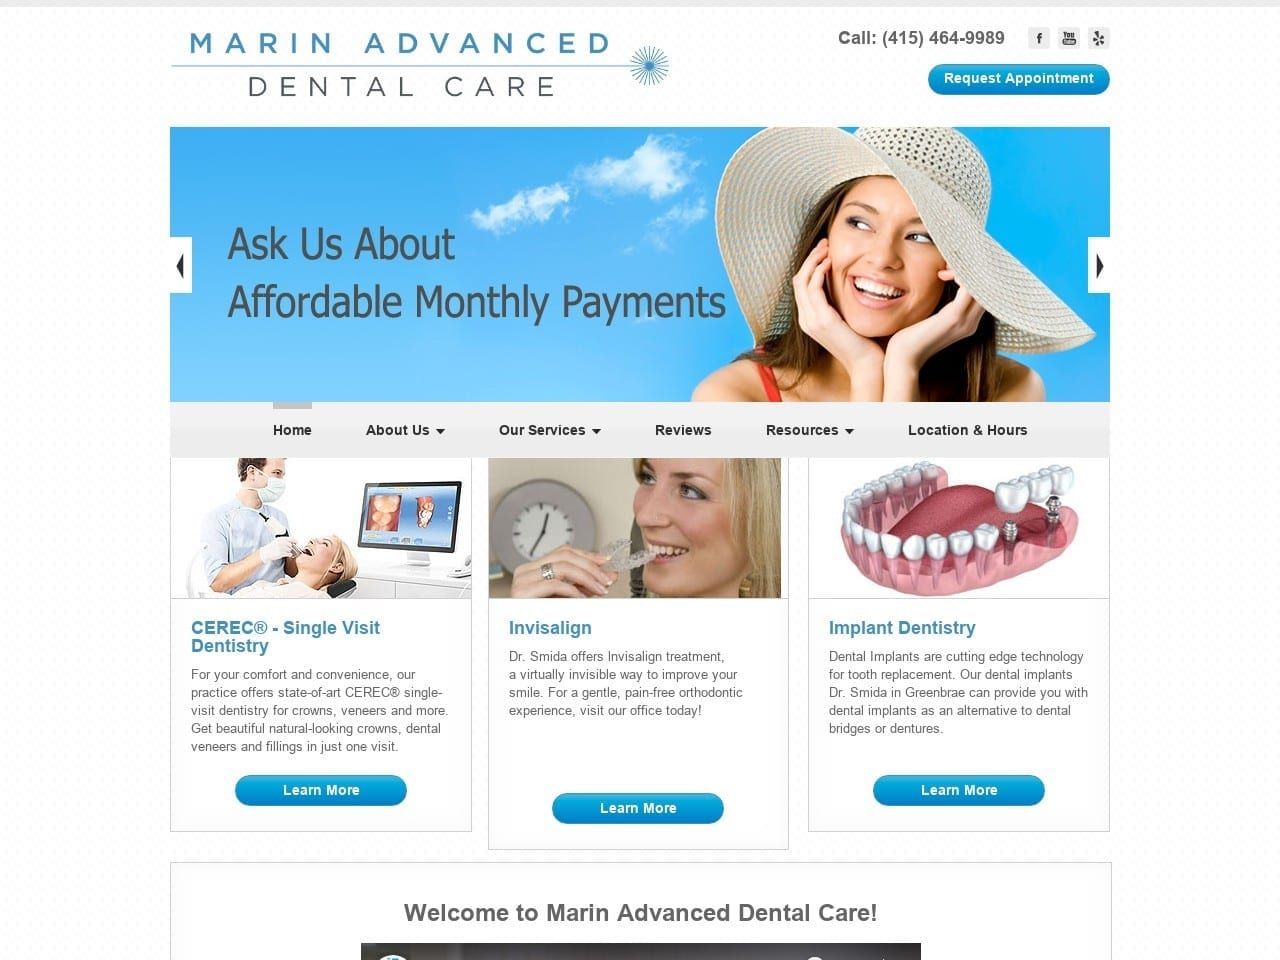 Greenbrae Dental Care Website Screenshot from greenbraedentalcare.com